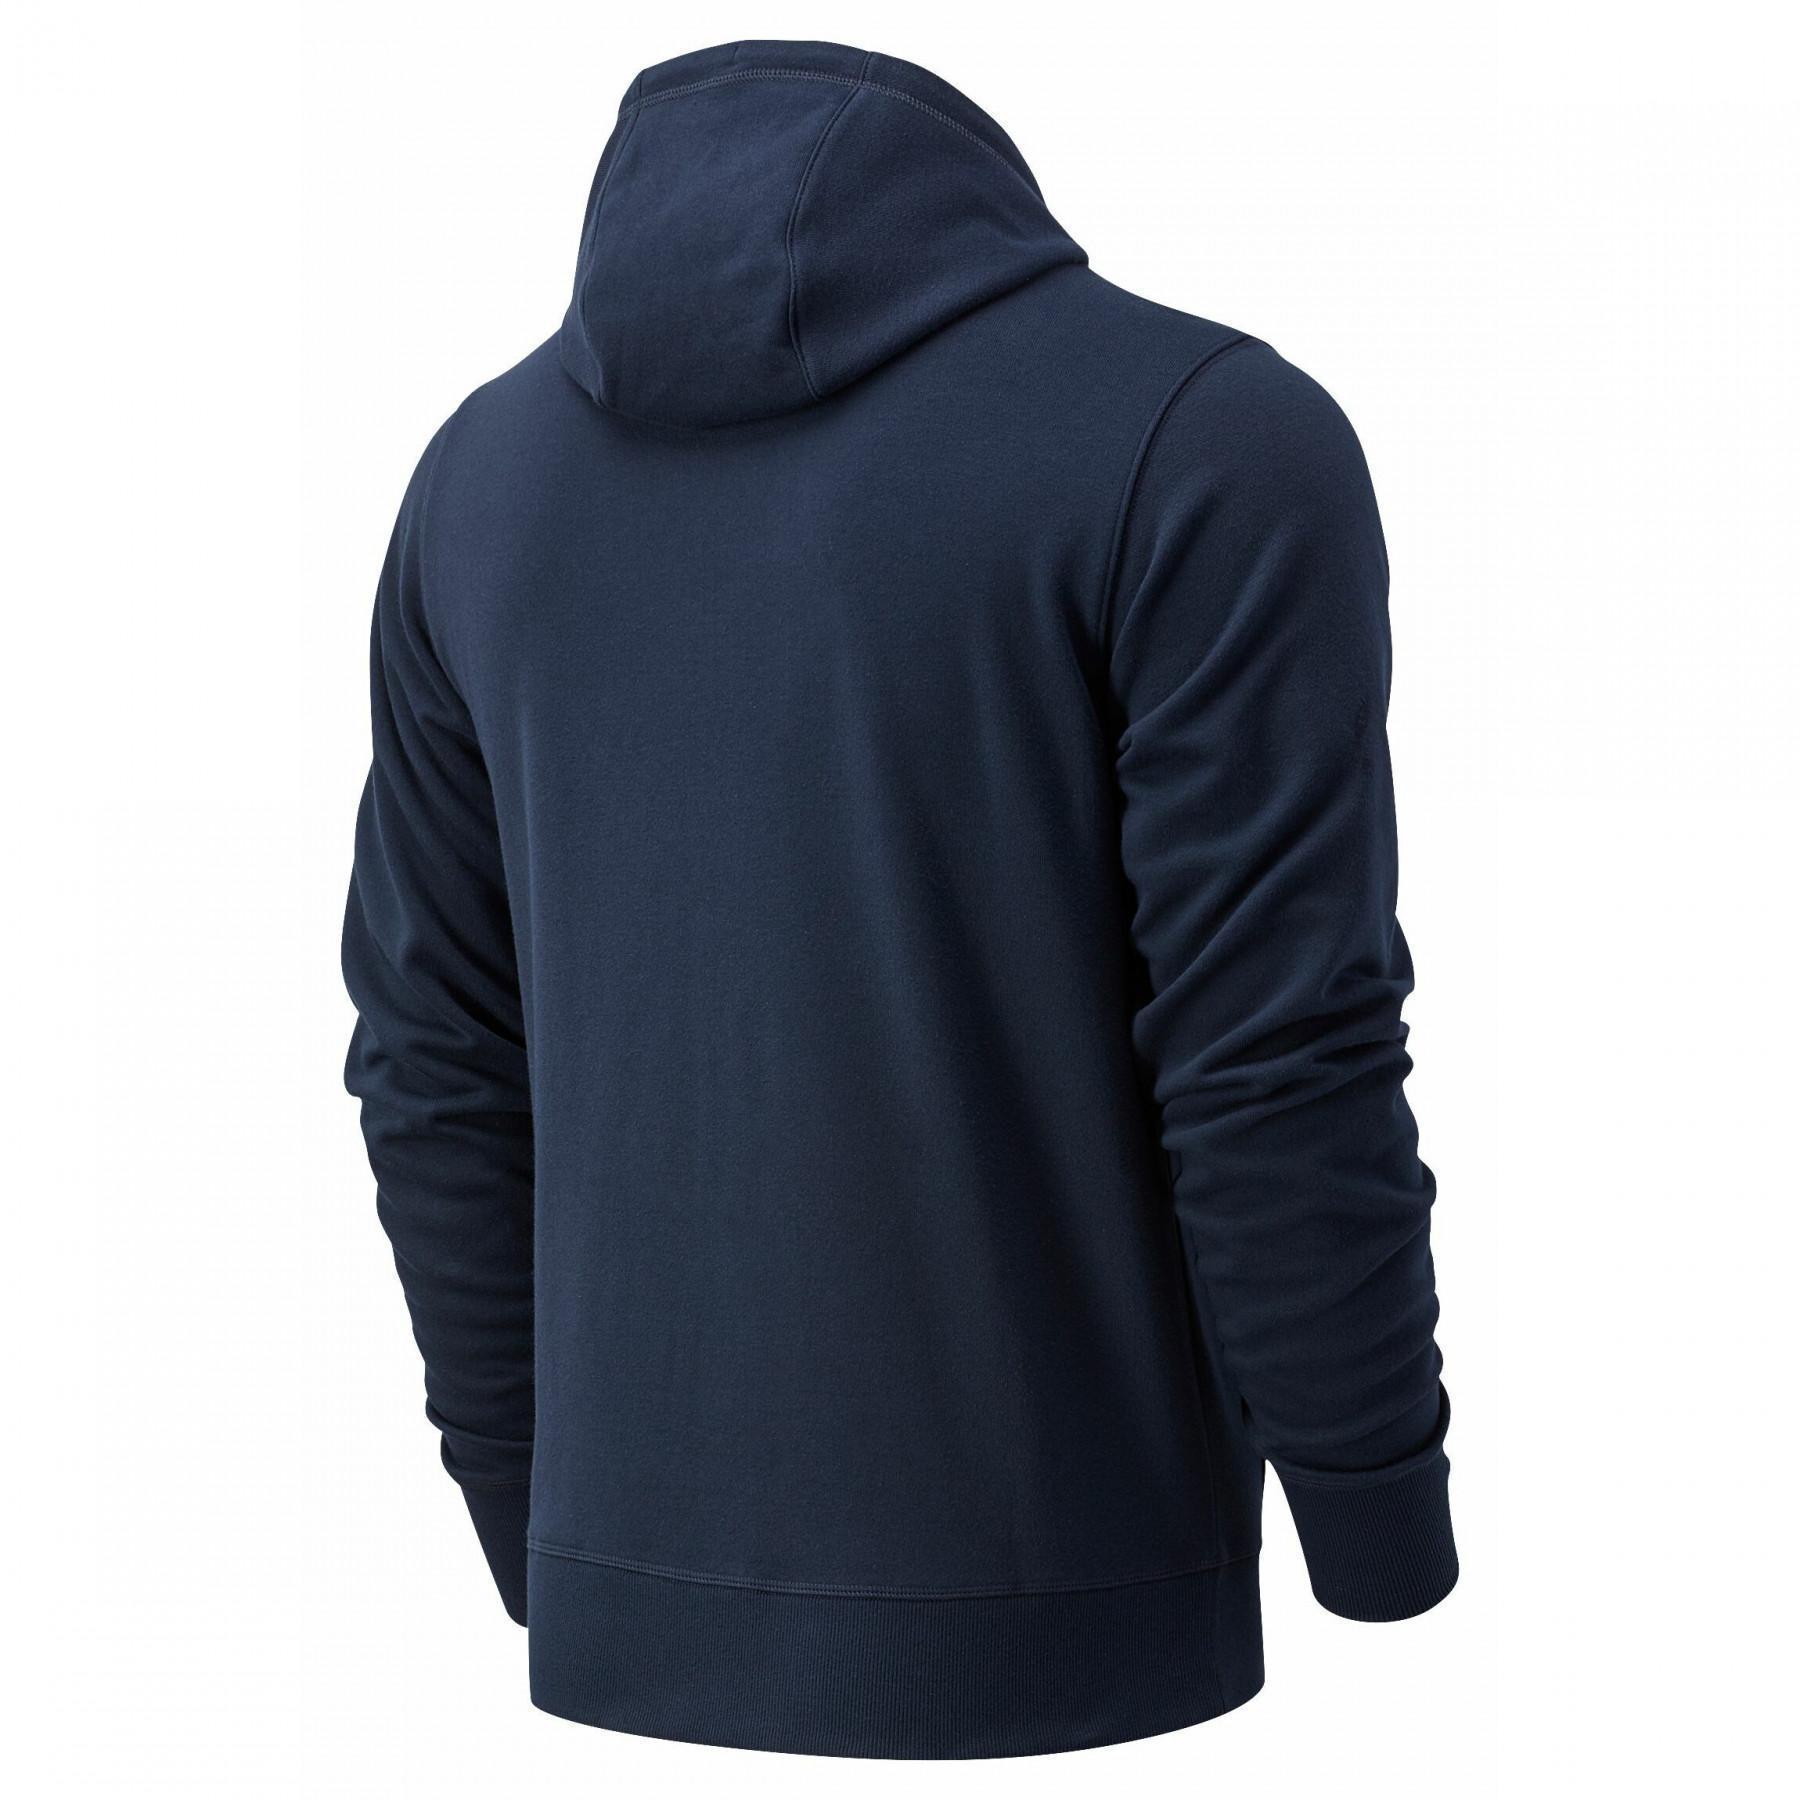 Full zip sweatshirt New Balance essentials stacked